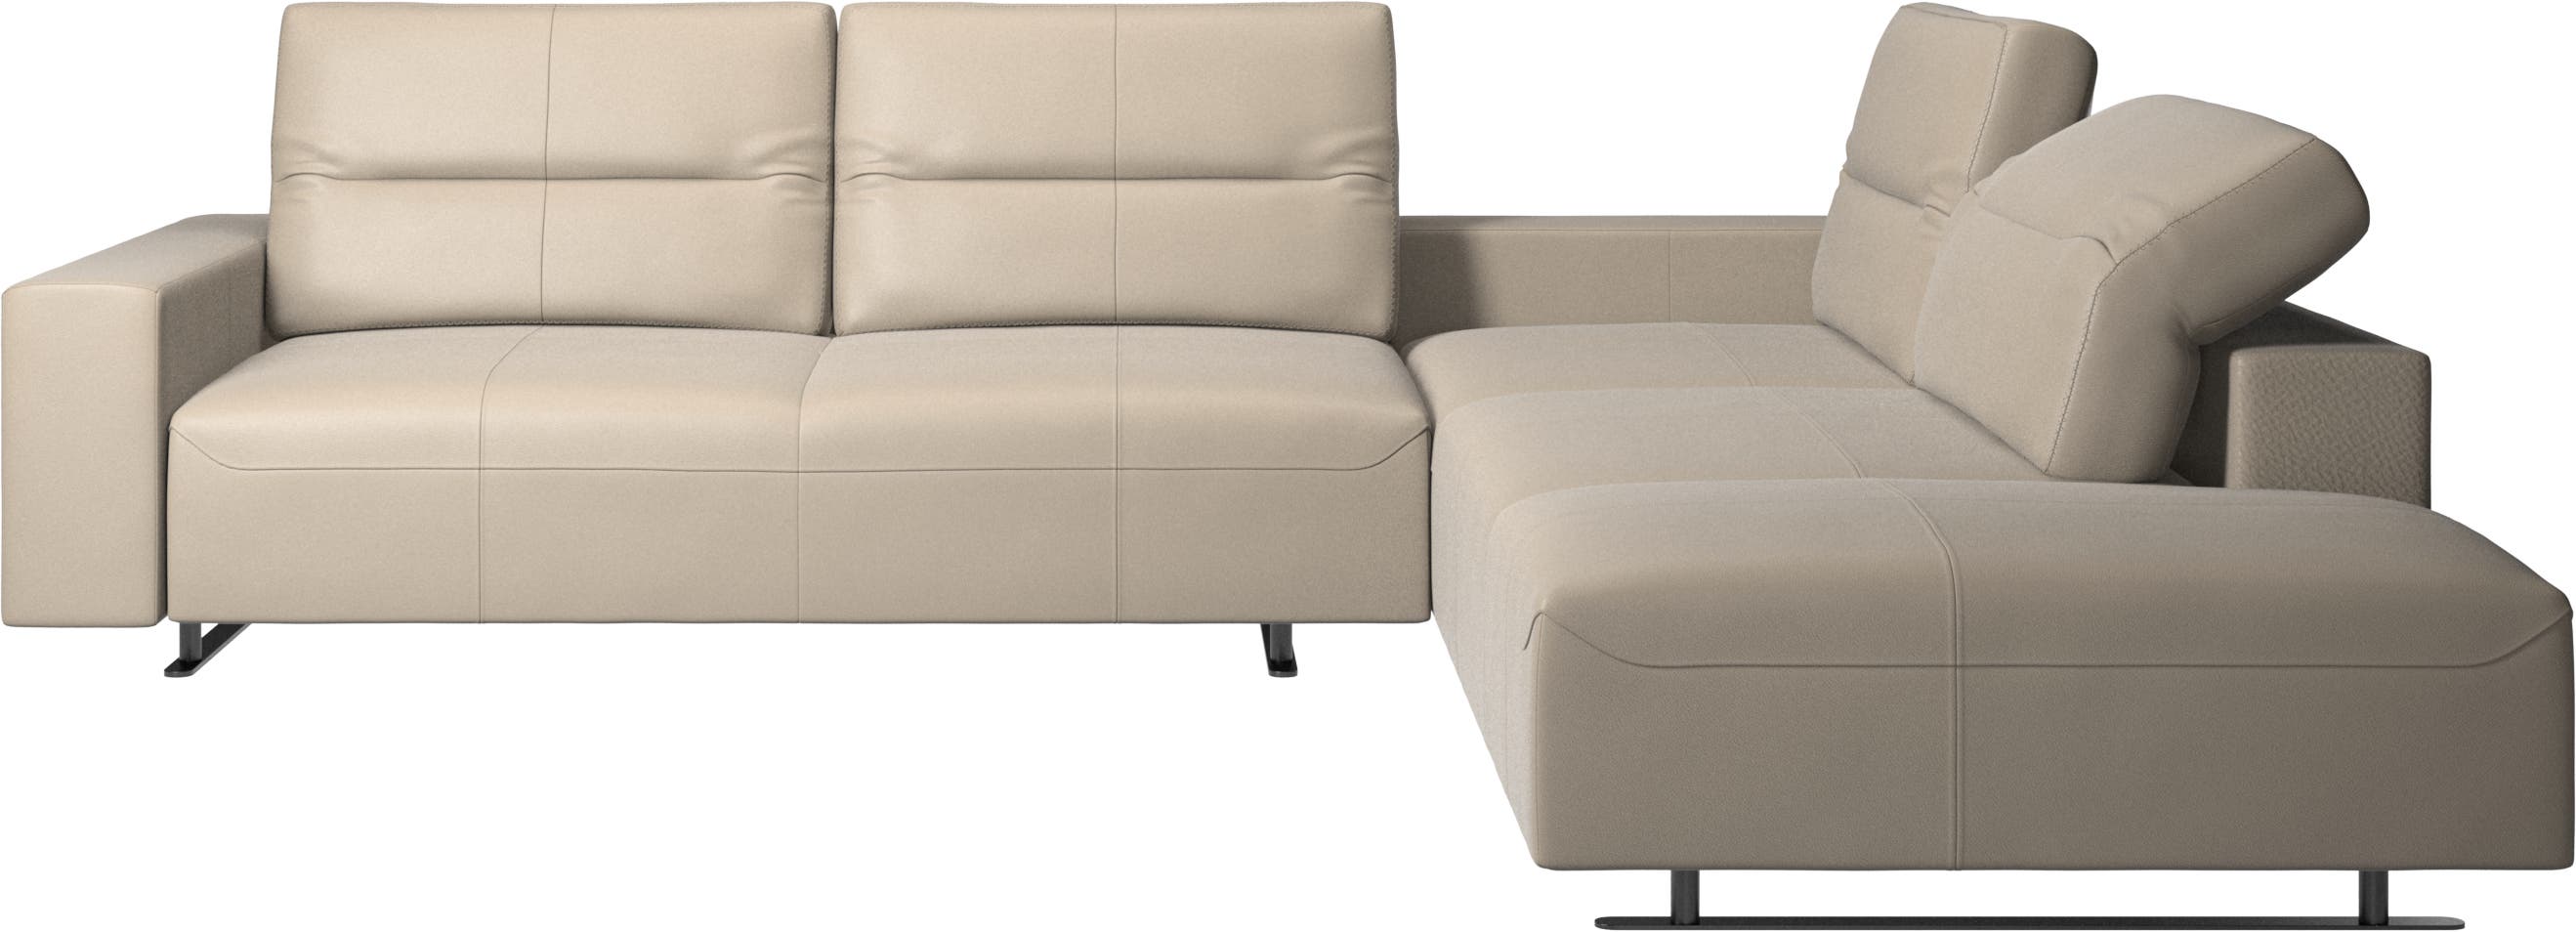 Hampton corner sofa with adjustable back and lounging unit